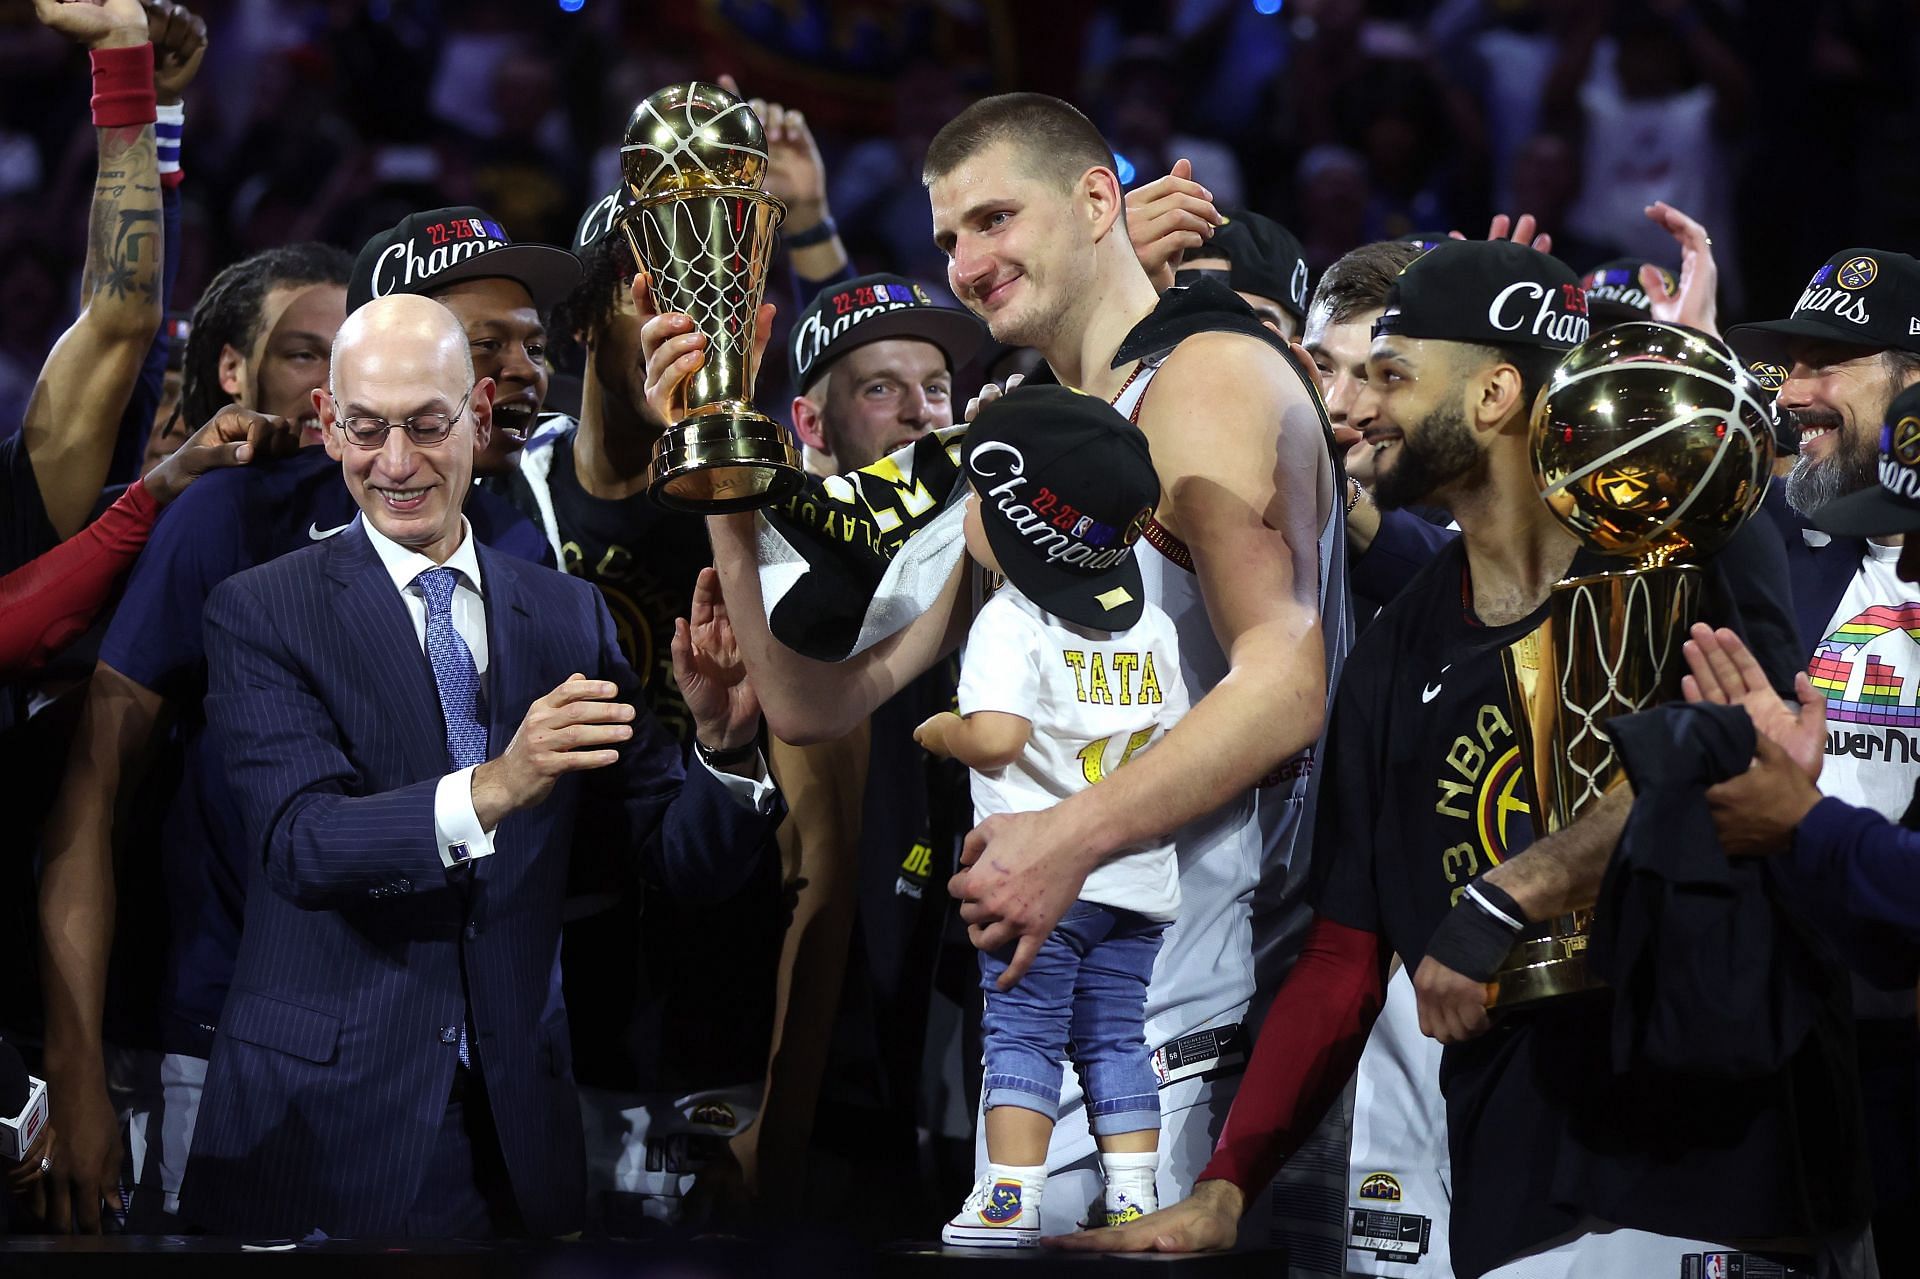 Watch Nikola Jokic and Denver Nuggets go wild in the locker room after winning their first NBA